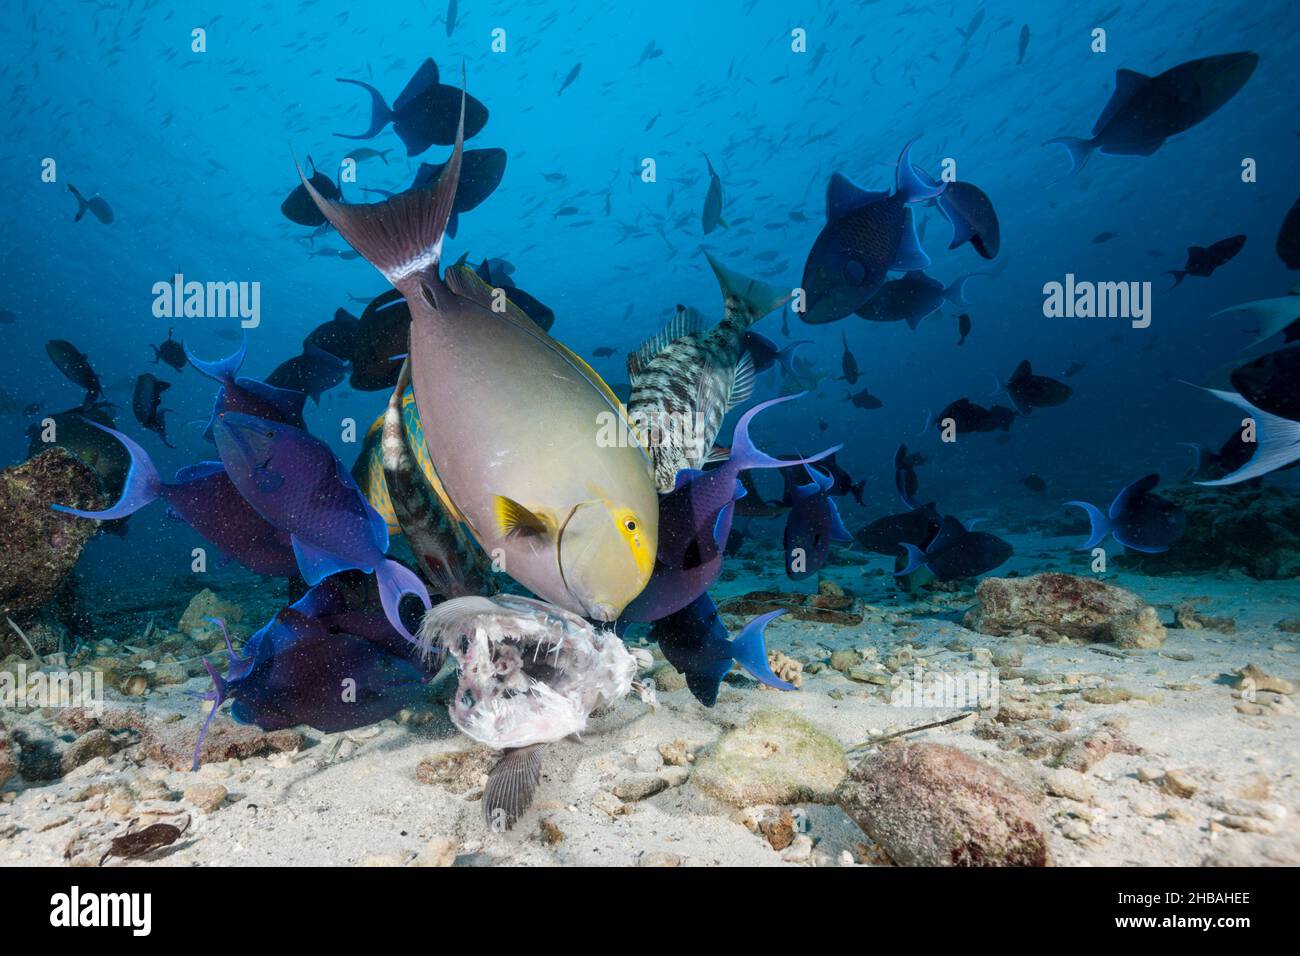 Peces de coral comen cebo de pescado, Acanthurus xanthopterus, Atolón Male del Norte, Océano Índico, Maldivas Foto de stock